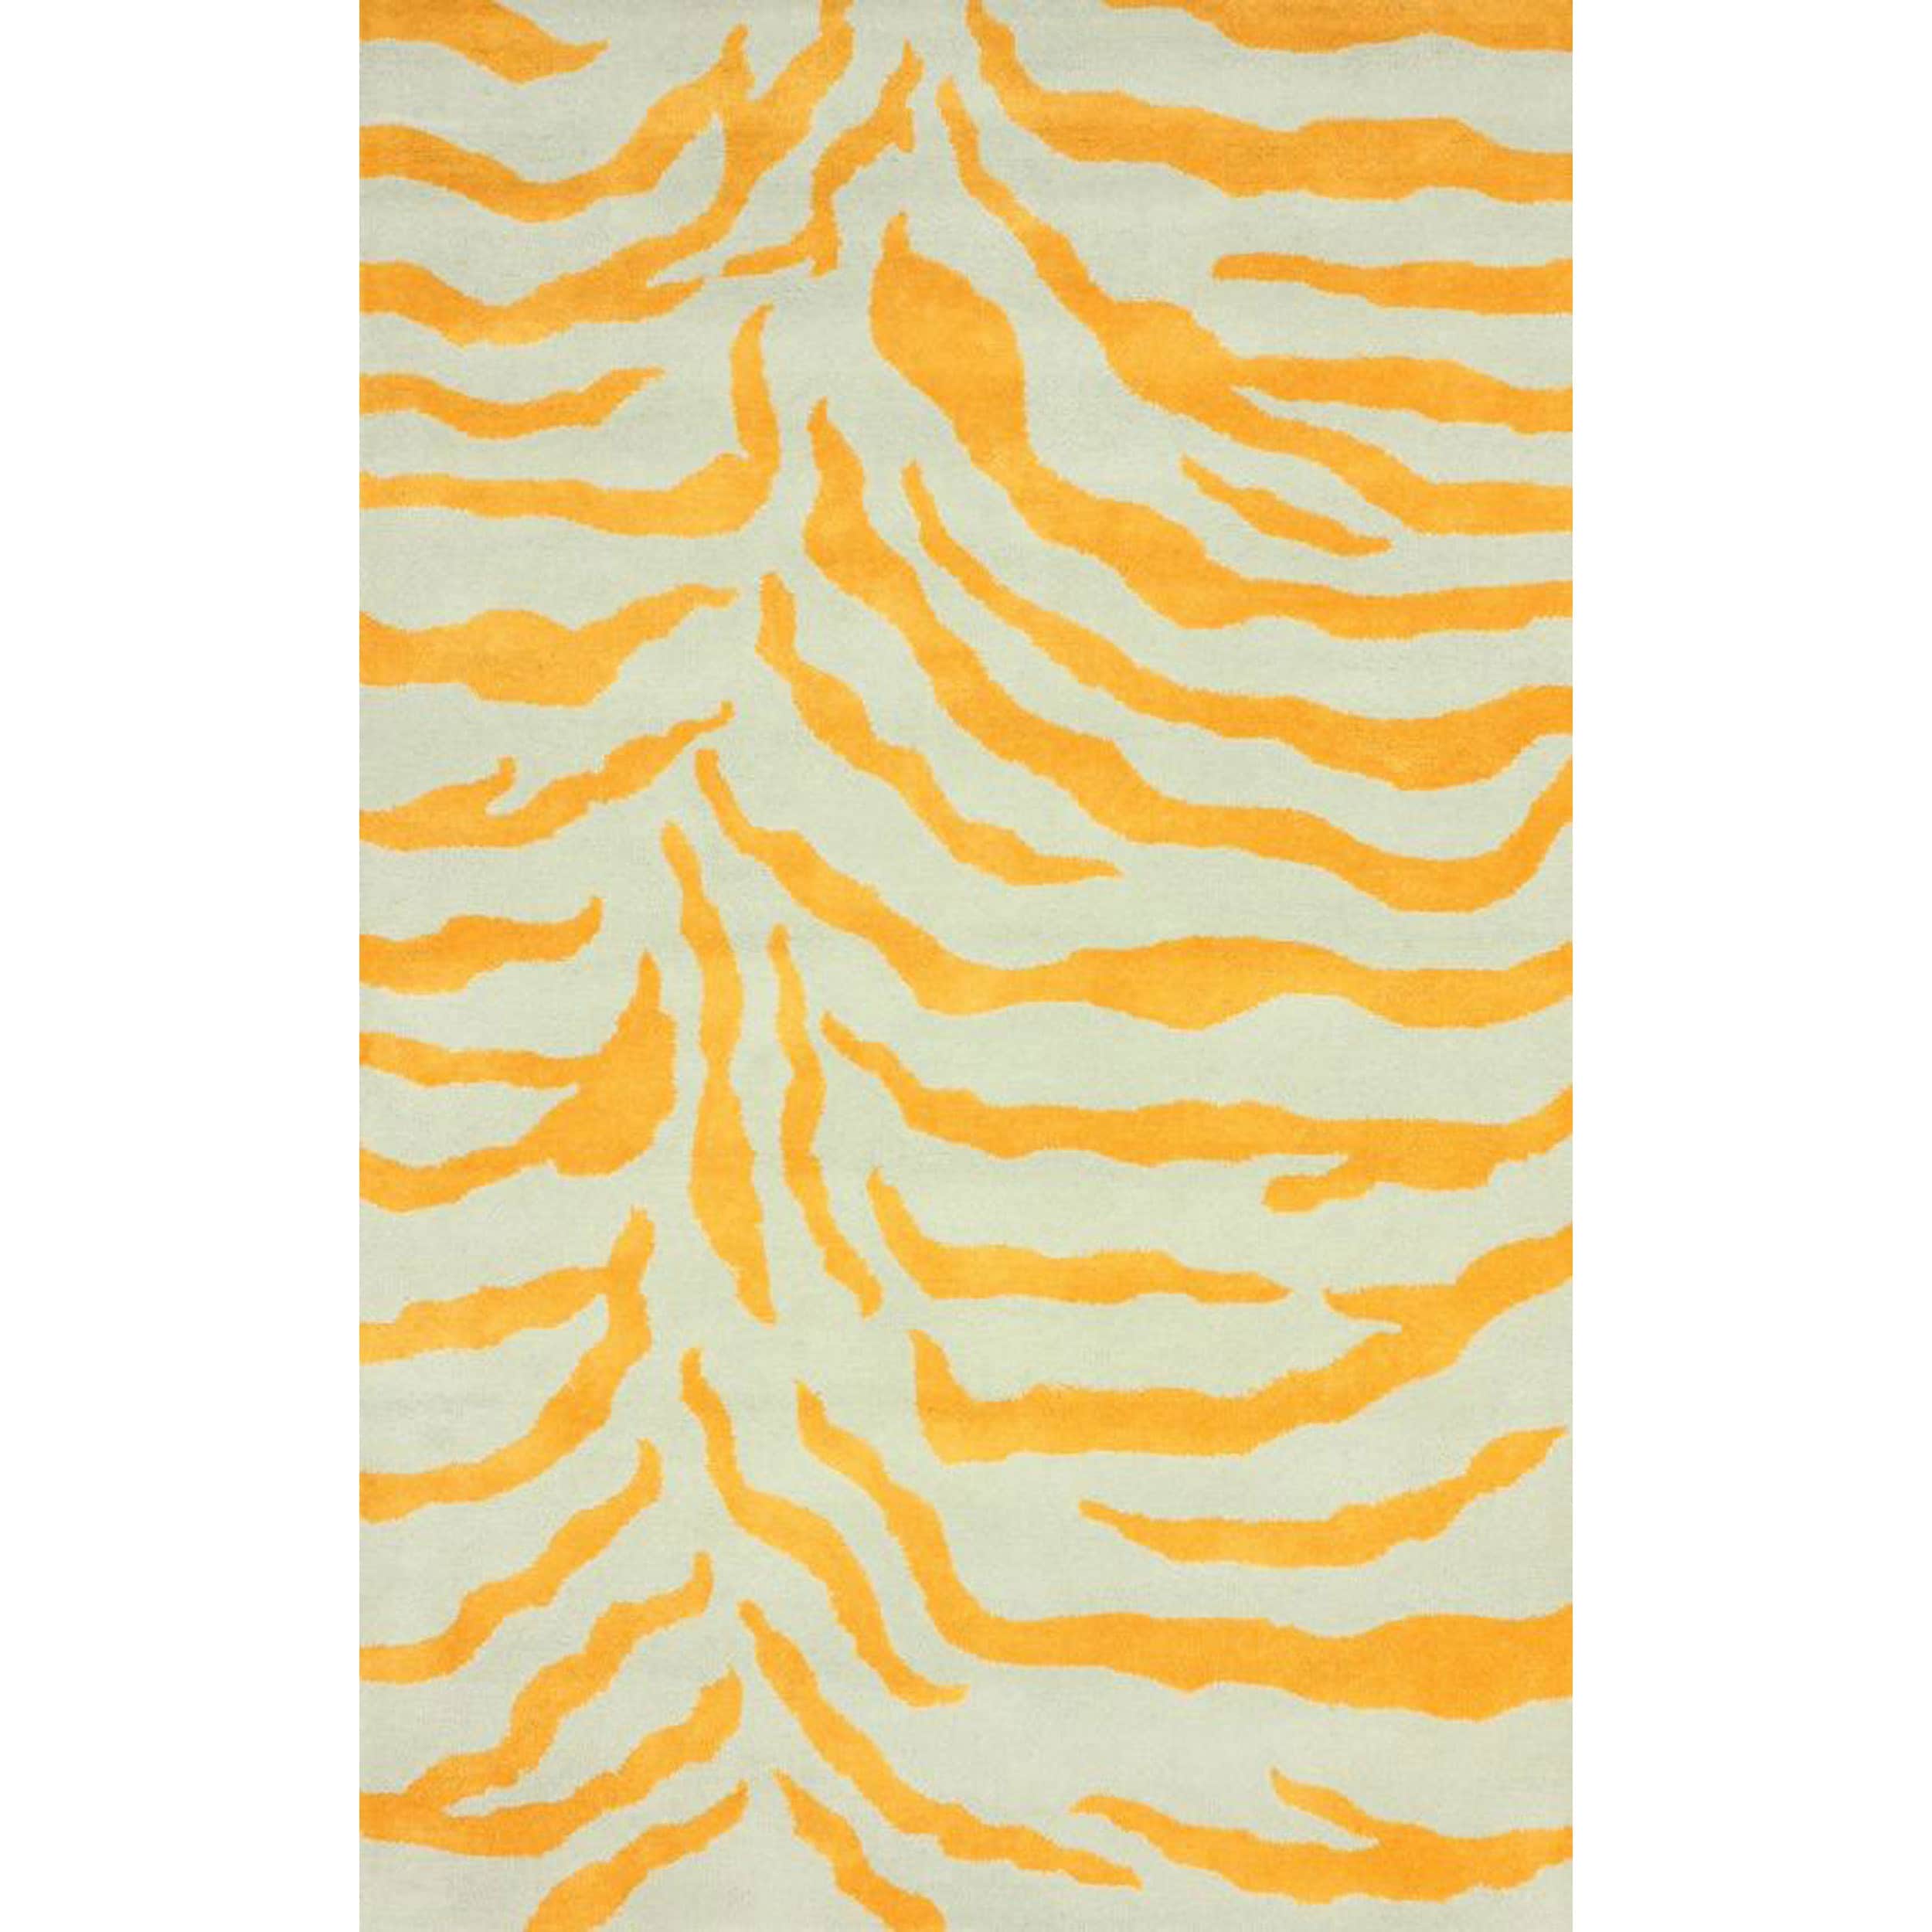 Nuloom Handmade Zebra Print Wool Tangerine Rug (5 X 8)